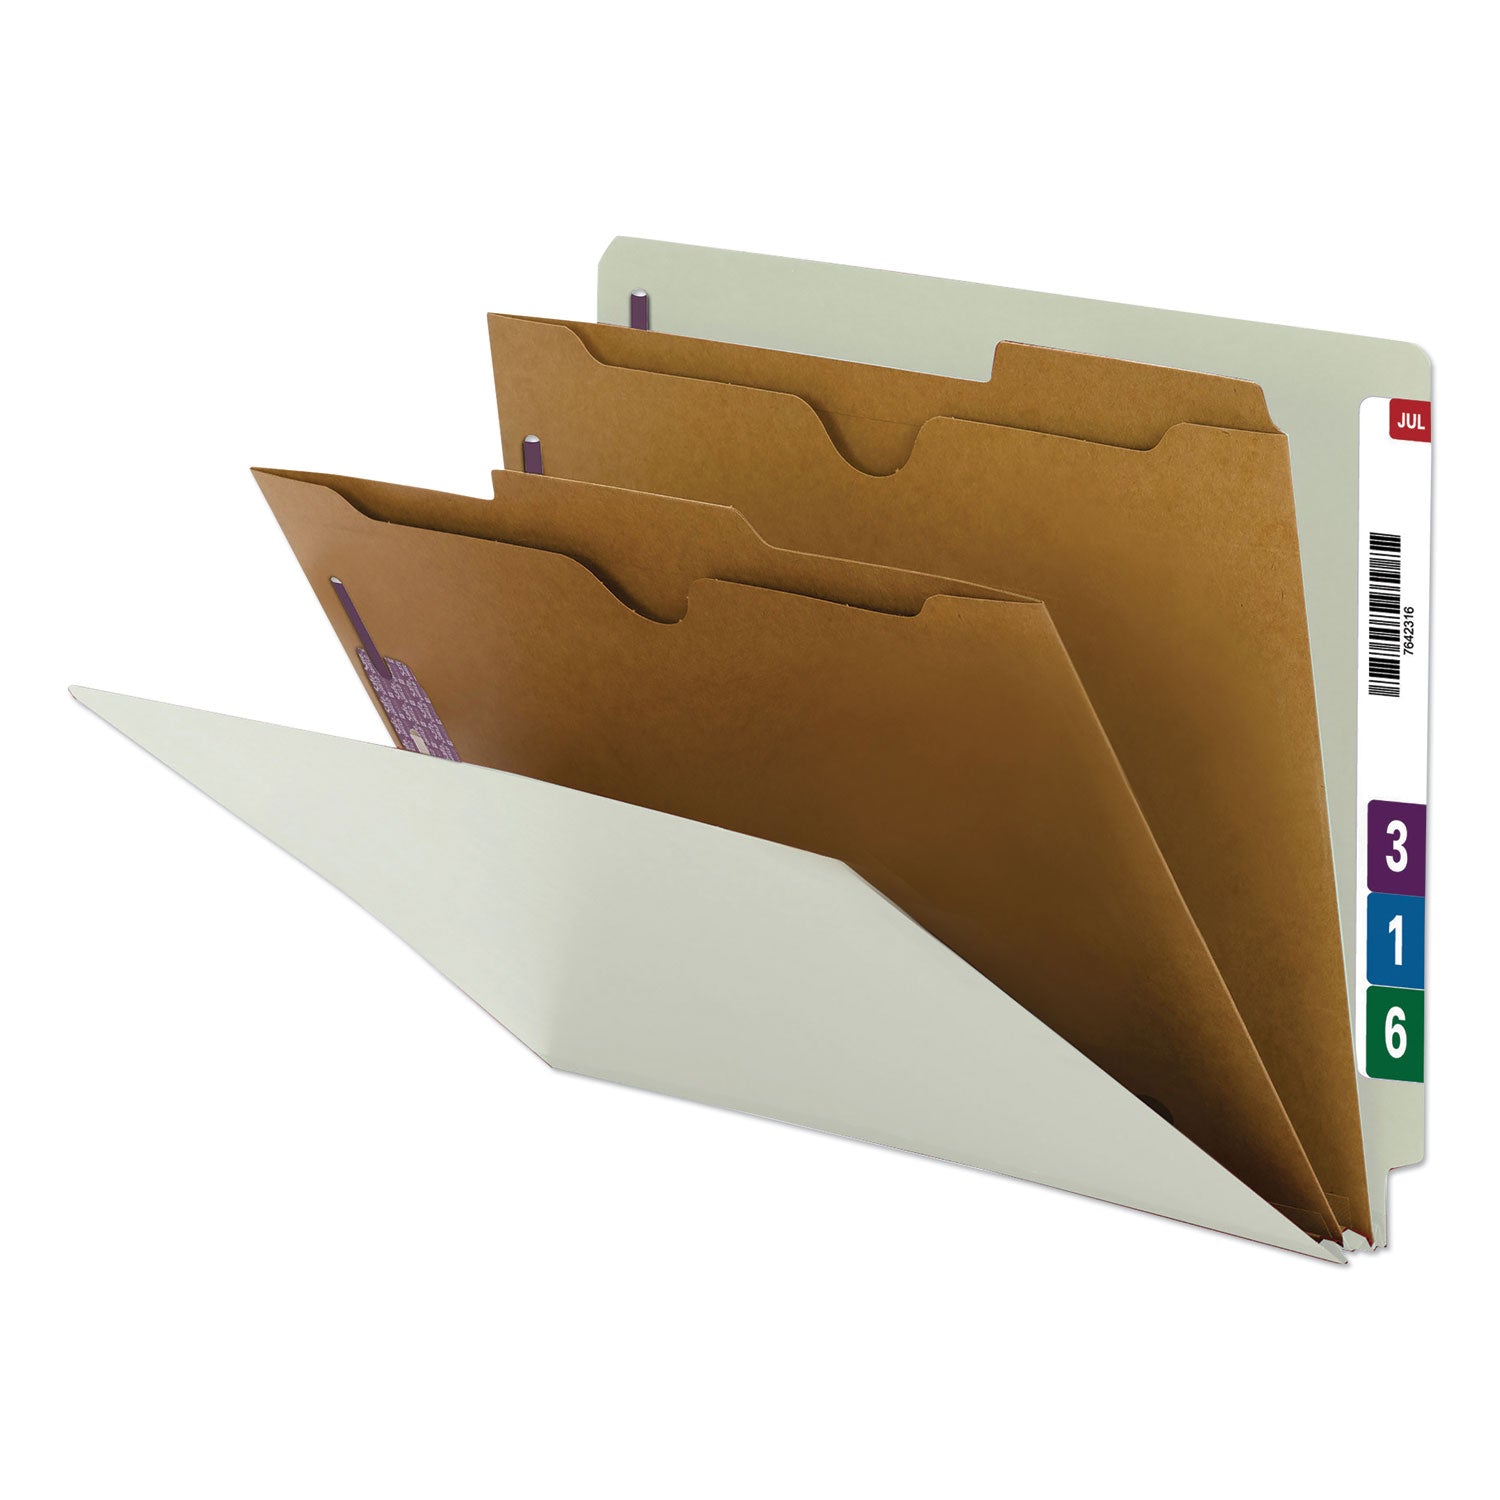 X-Heavy End Tab Pressboard Classification Folders, Six SafeSHIELD Fasteners, 2 Dividers, Letter Size, Gray-Green, 10/Box - 